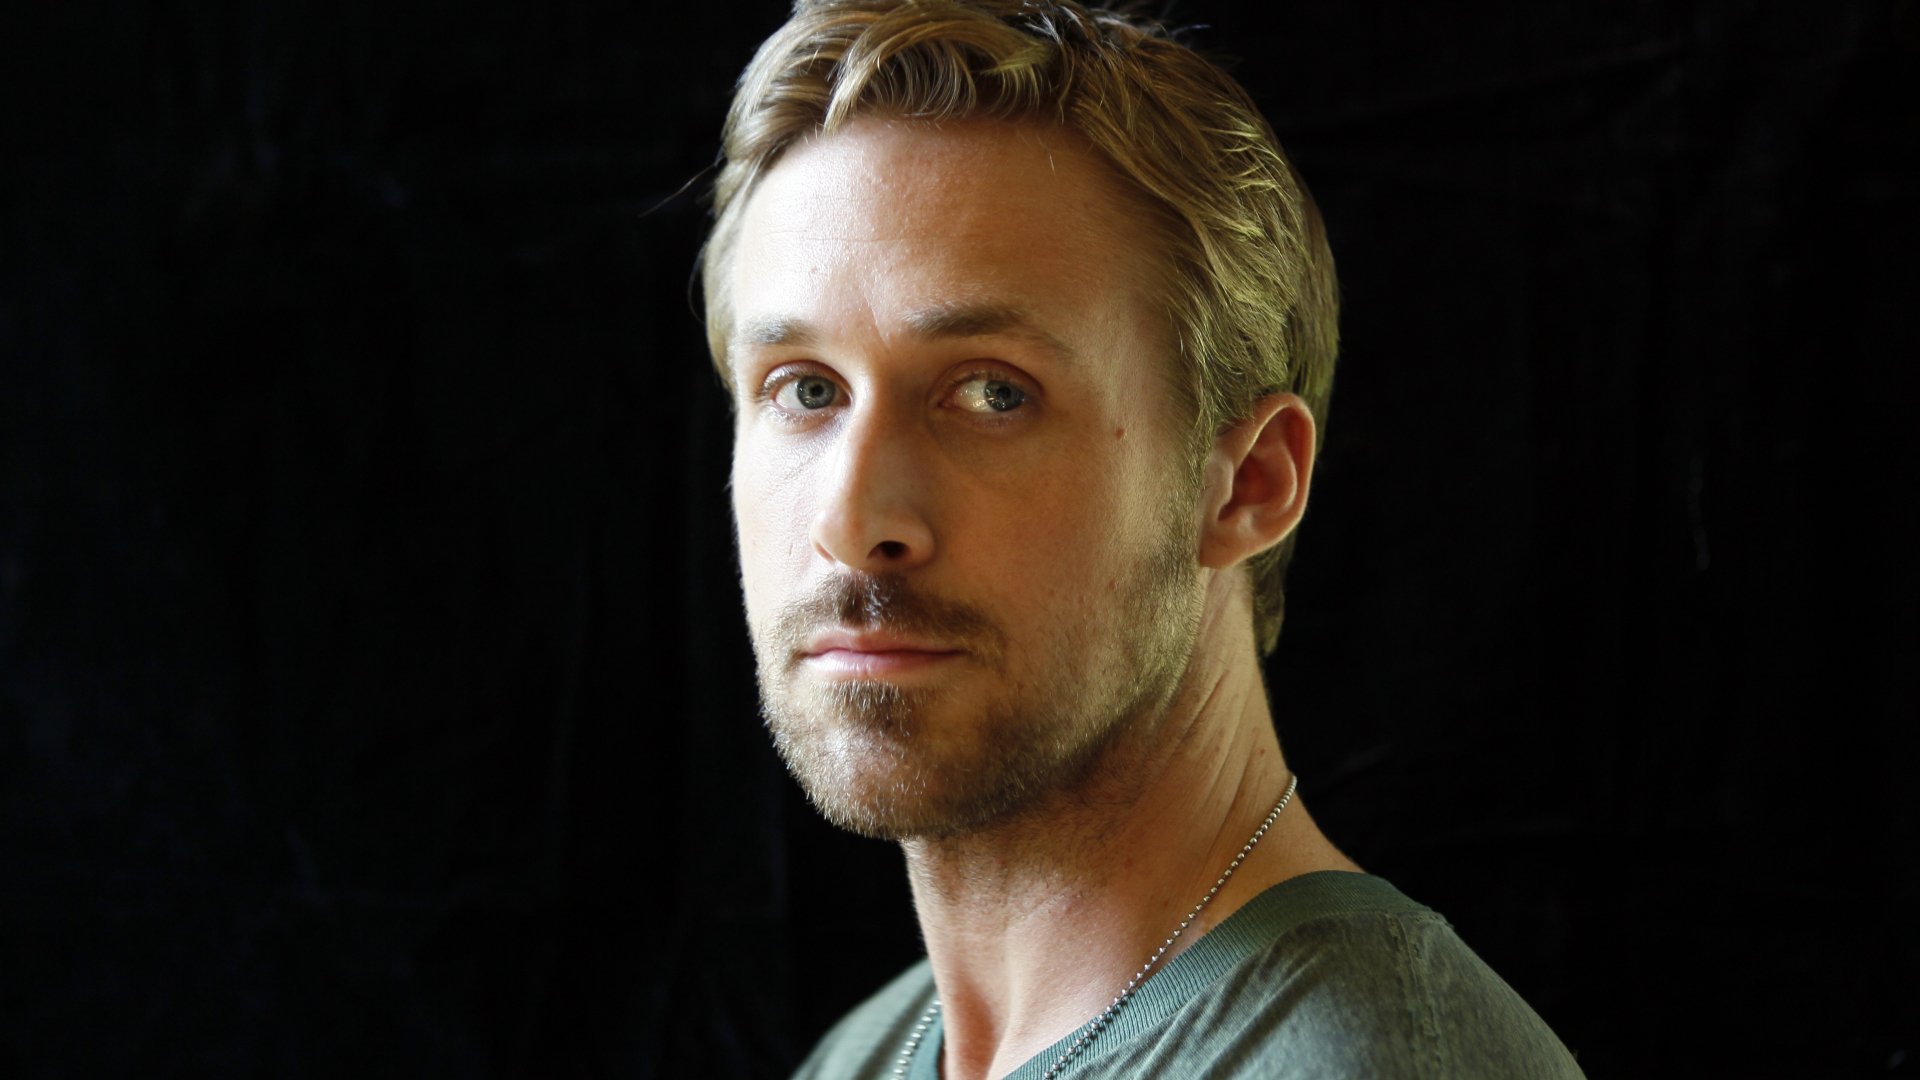 Download Canadian Actor Celebrity Ryan Gosling 4k Ultra Hd Wallpaper 